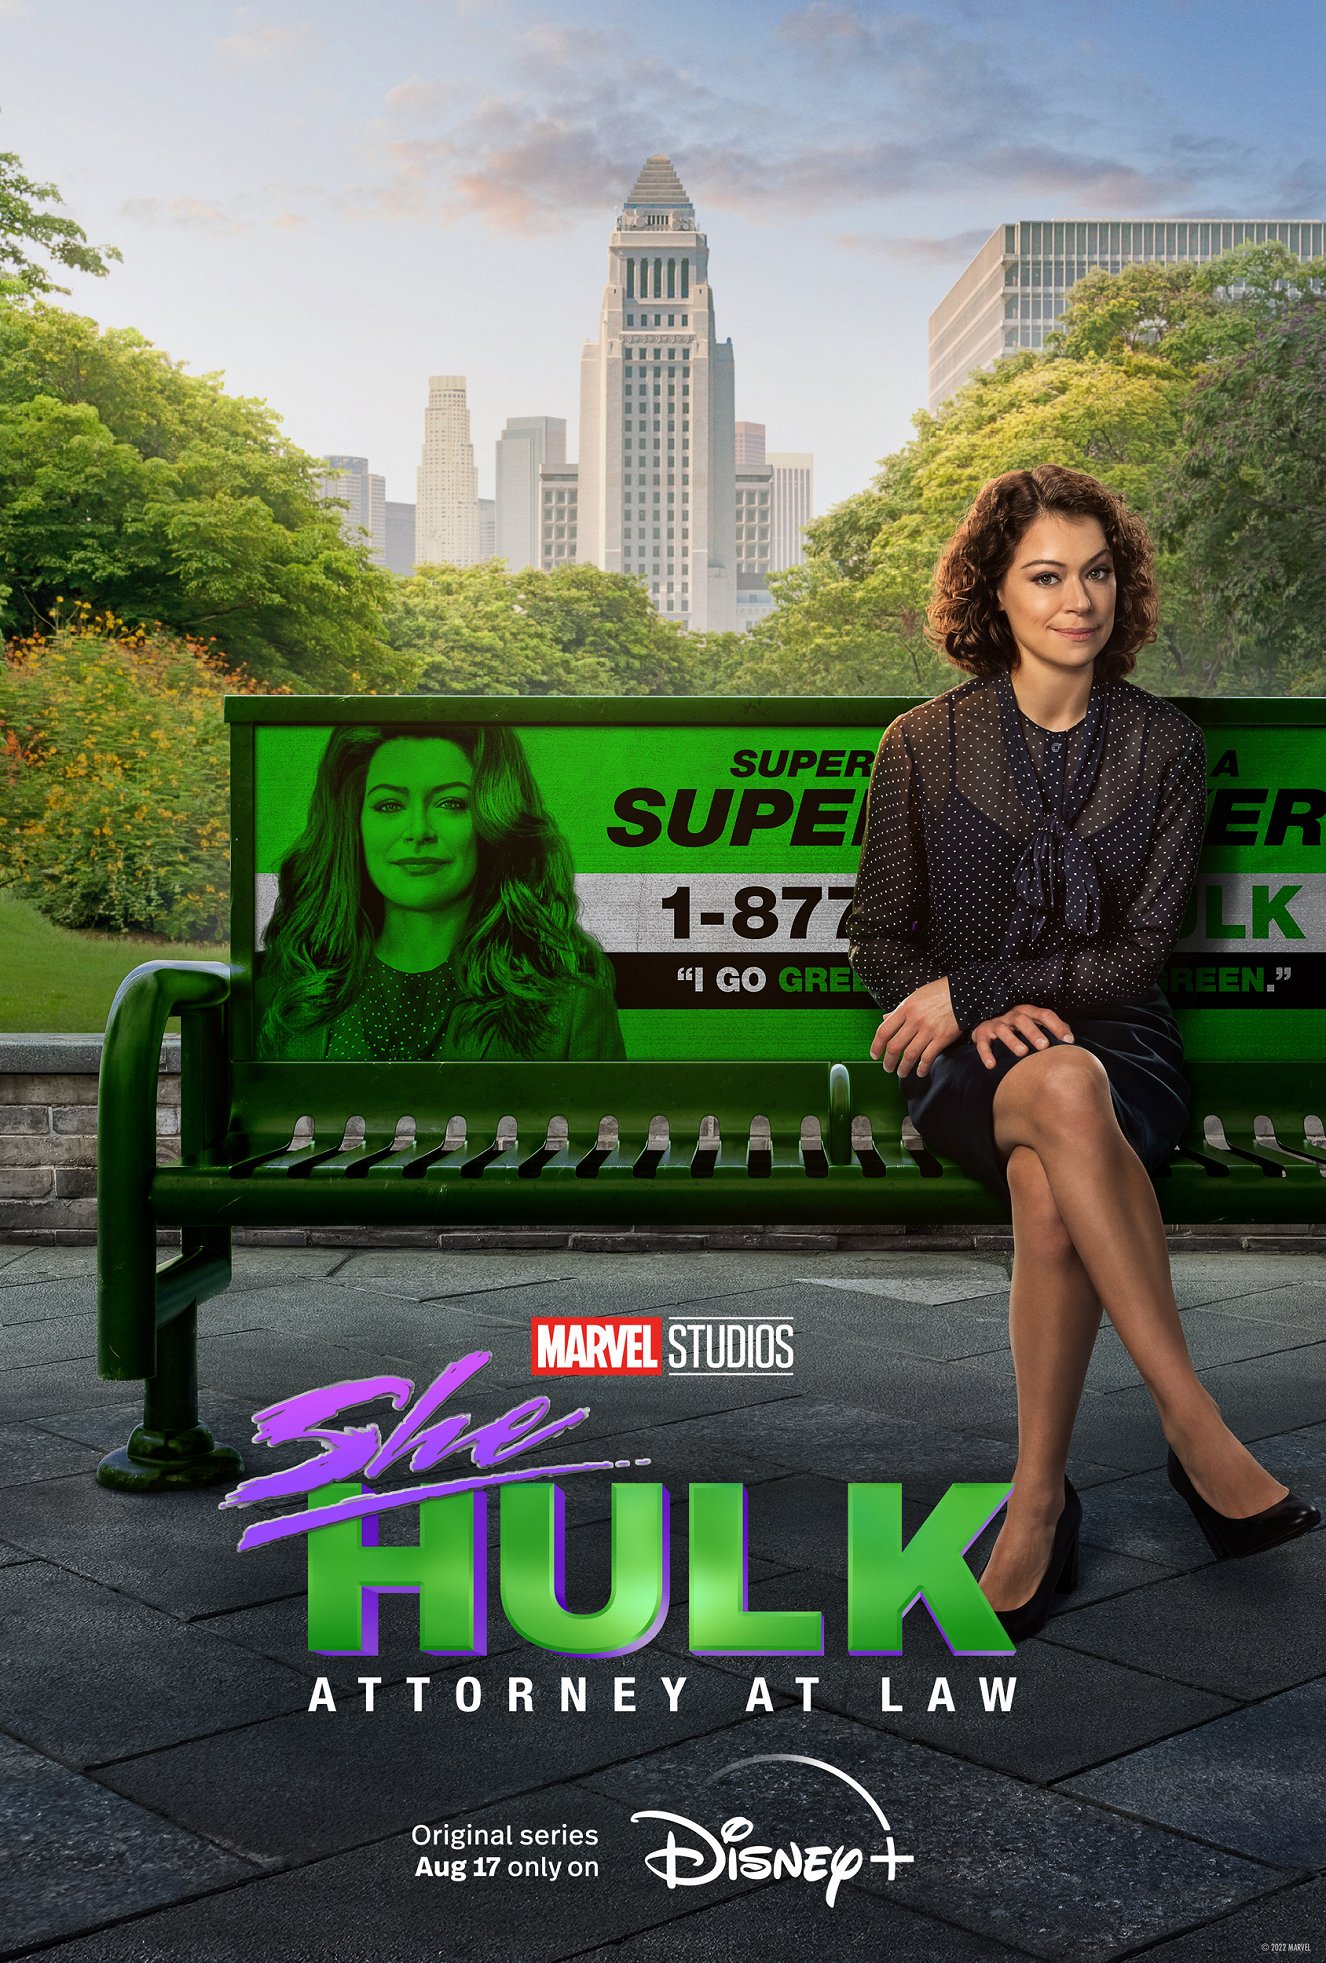 She-Hulk: Neuveritelna pravnicka / She-Hulk: Attorney at Law S01E06 (CZ/SK/EN)[WEB-DL][2160p-HDR-HEVC]  = CSFD 52%